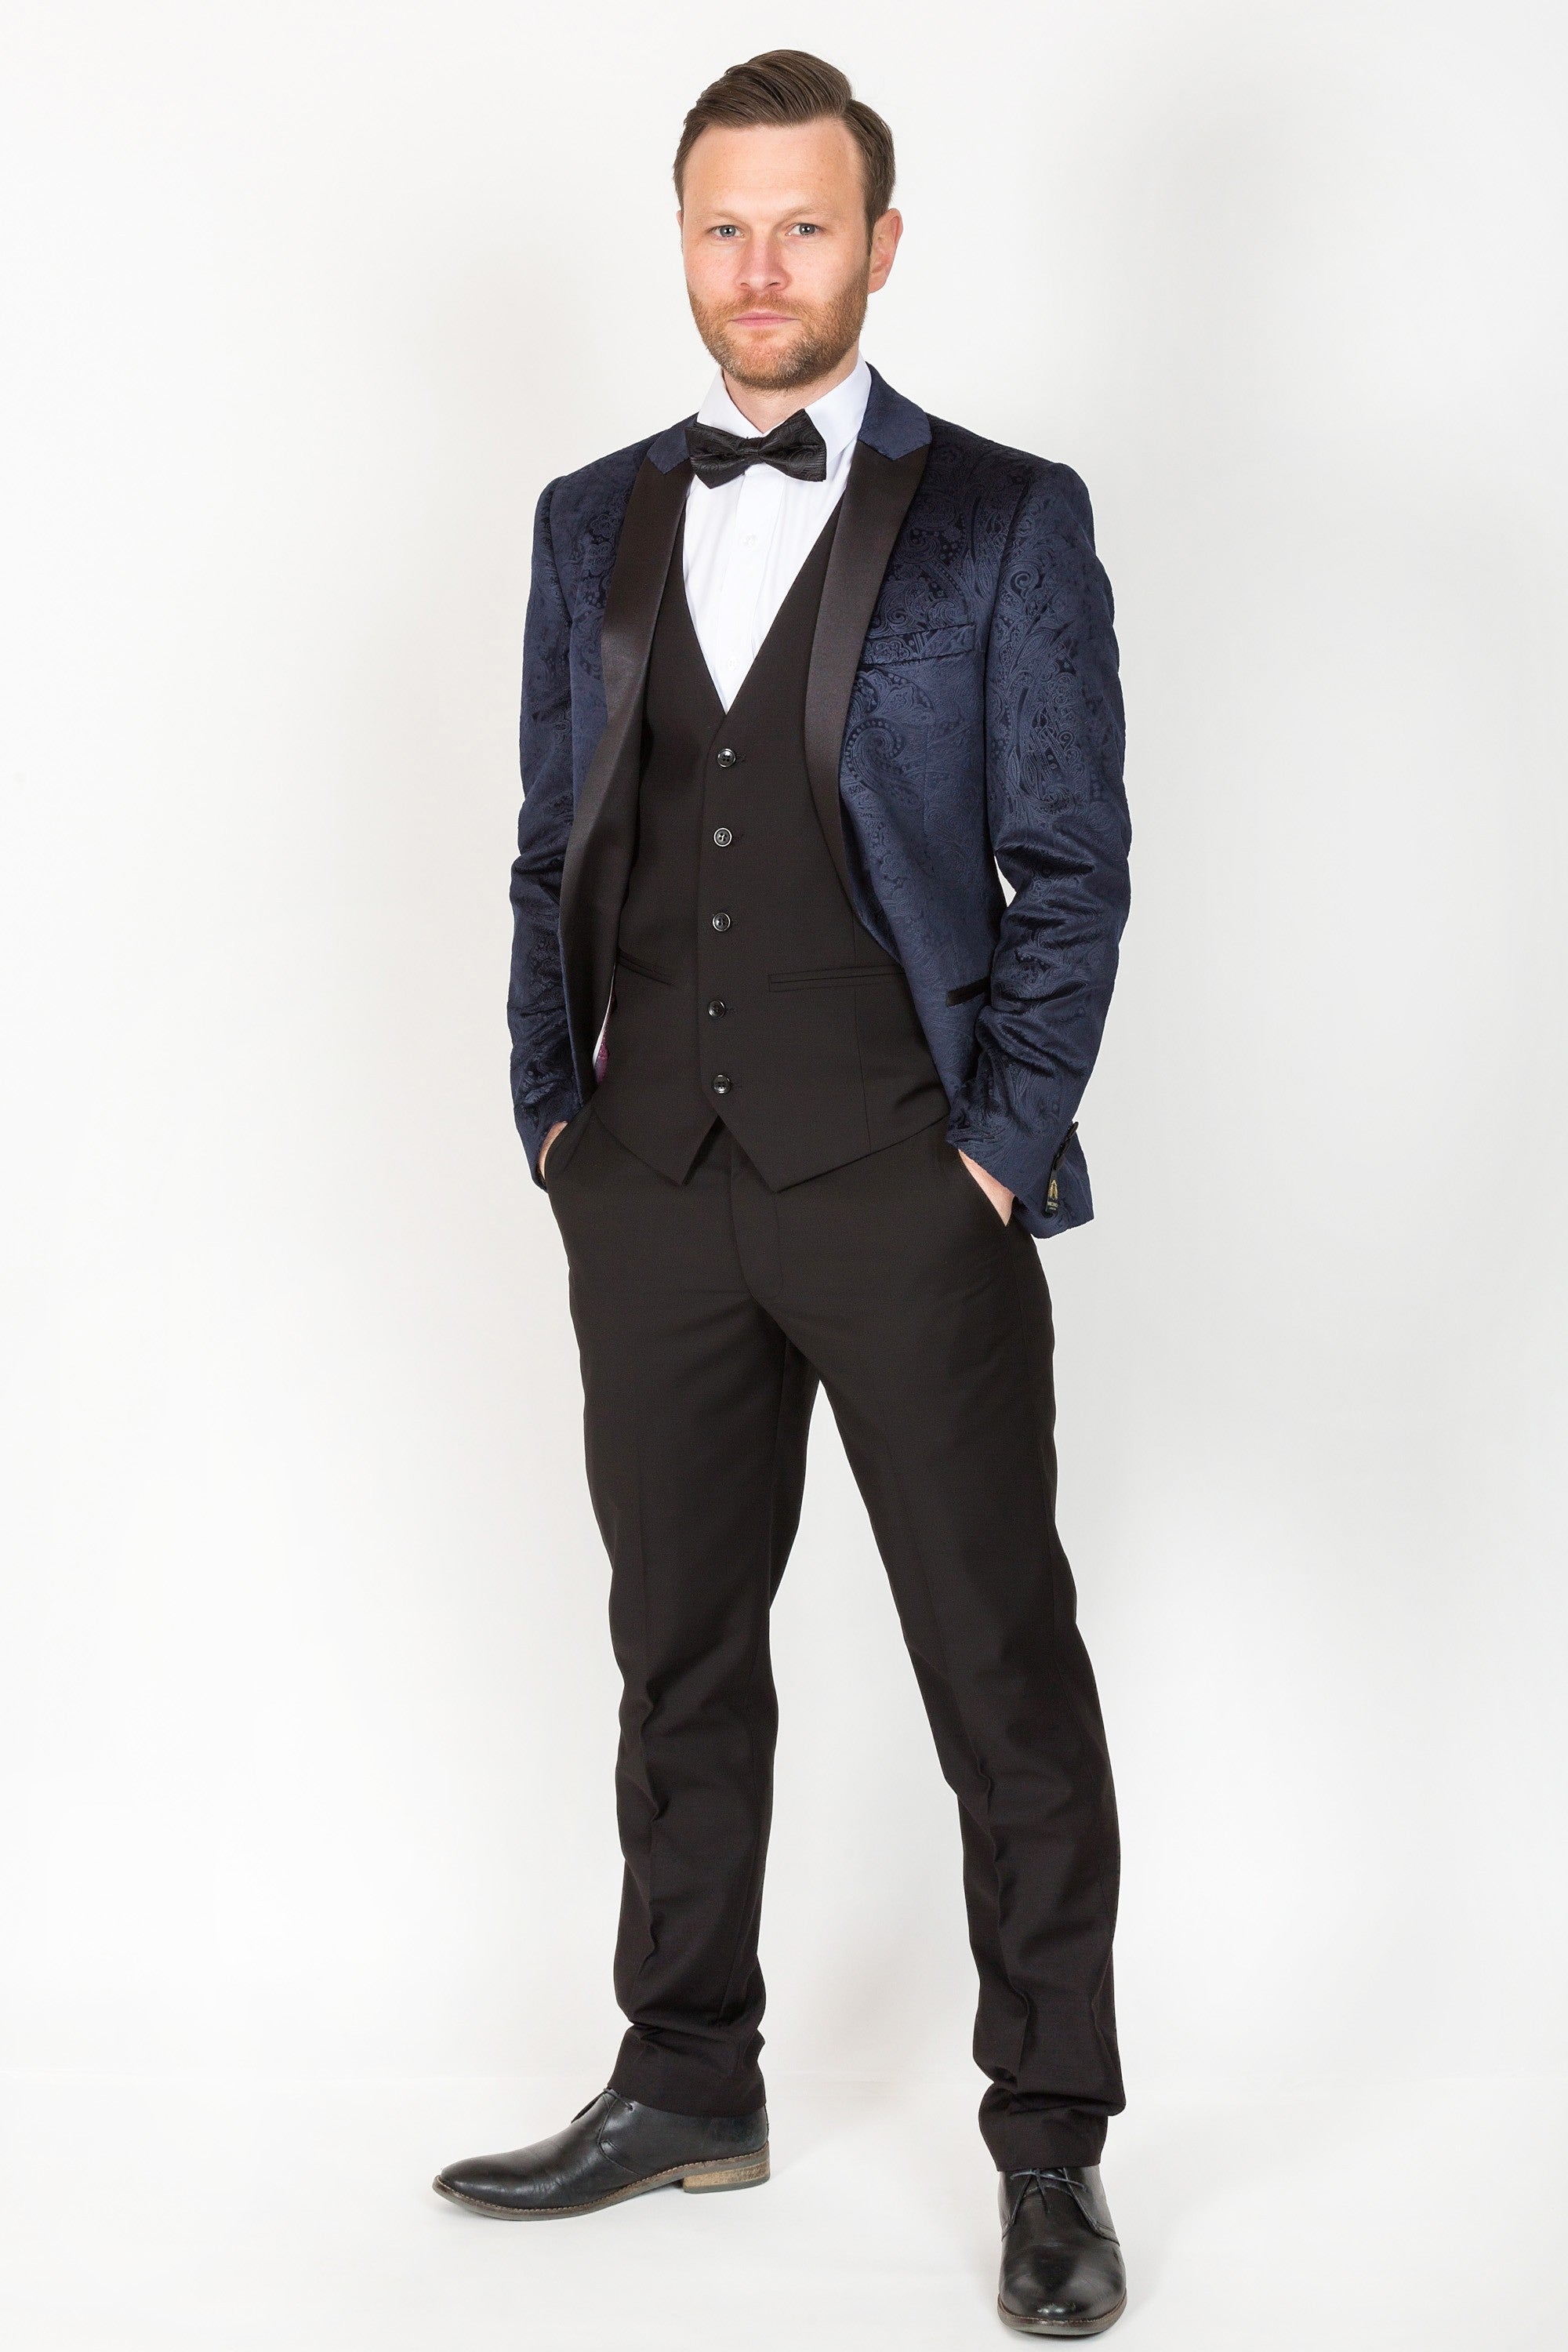 Simon Velvet Navy Tux Lapel Jacquard Blazer by Marc Darcy - Spirit Clothing